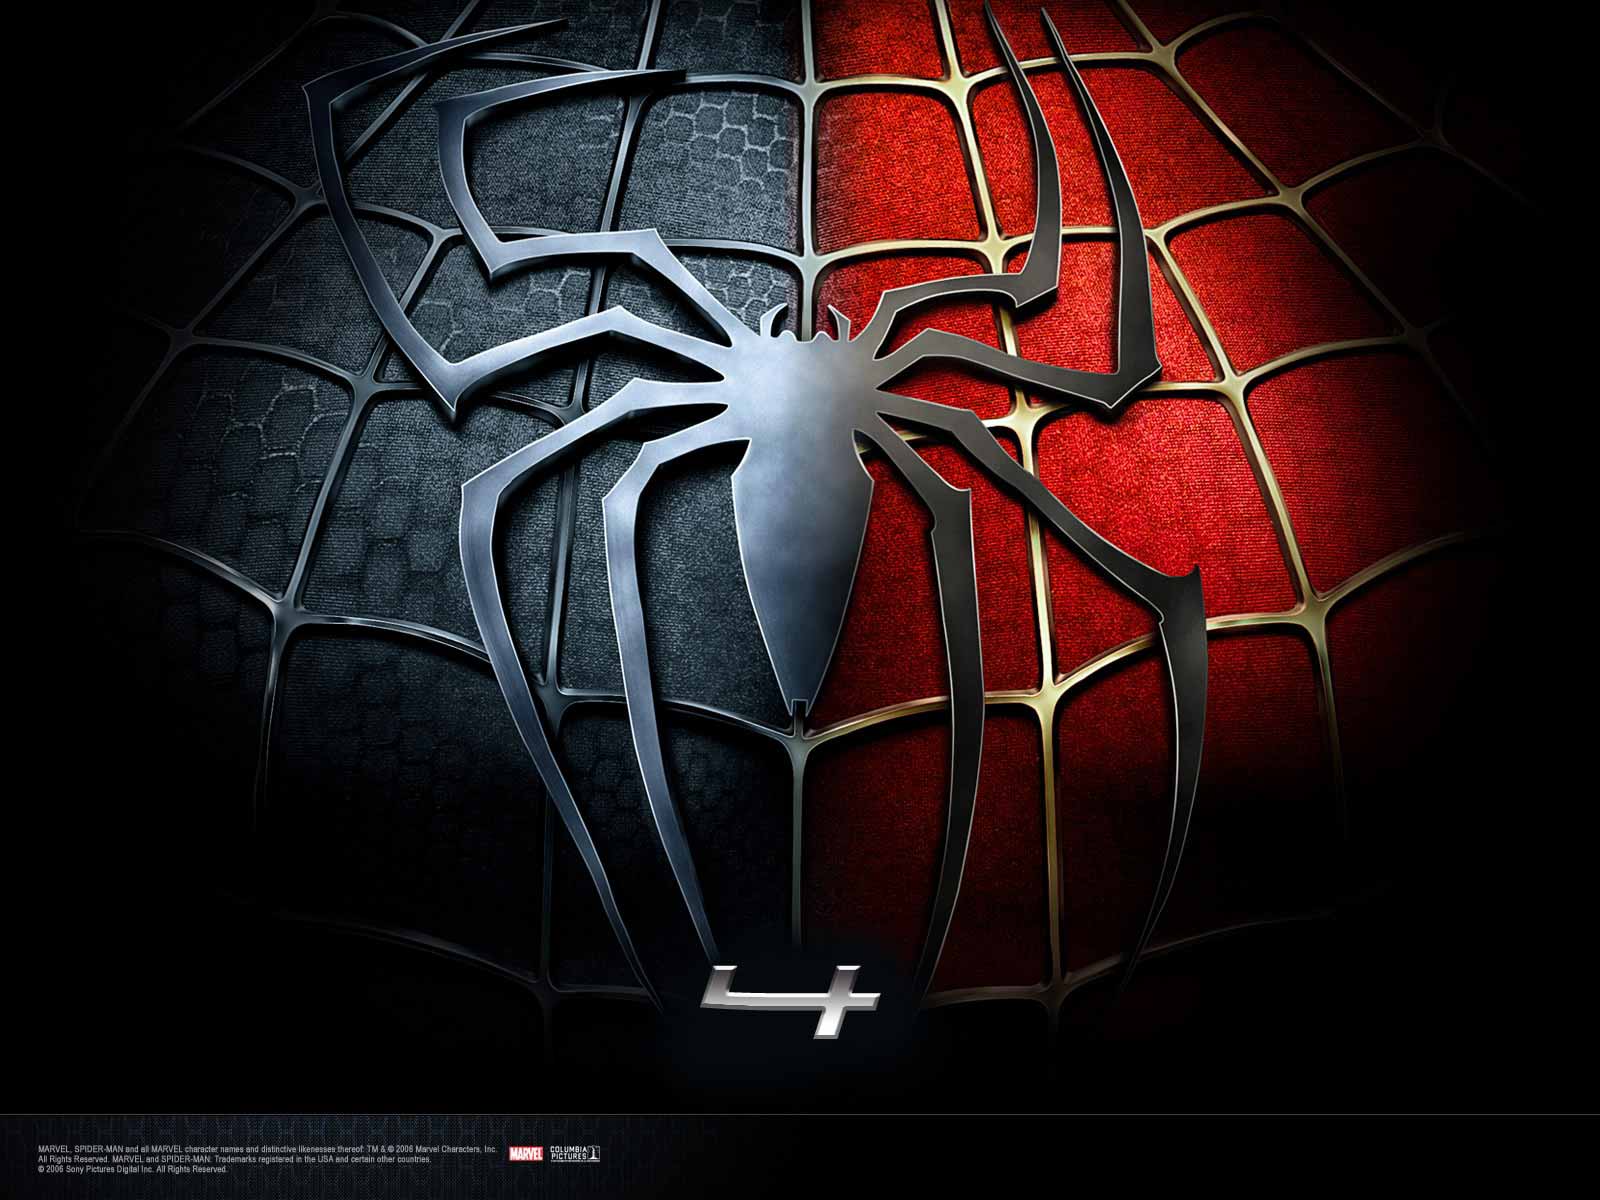 Spiderman HD Wallpaper 1080p Group Wallpaper House.com